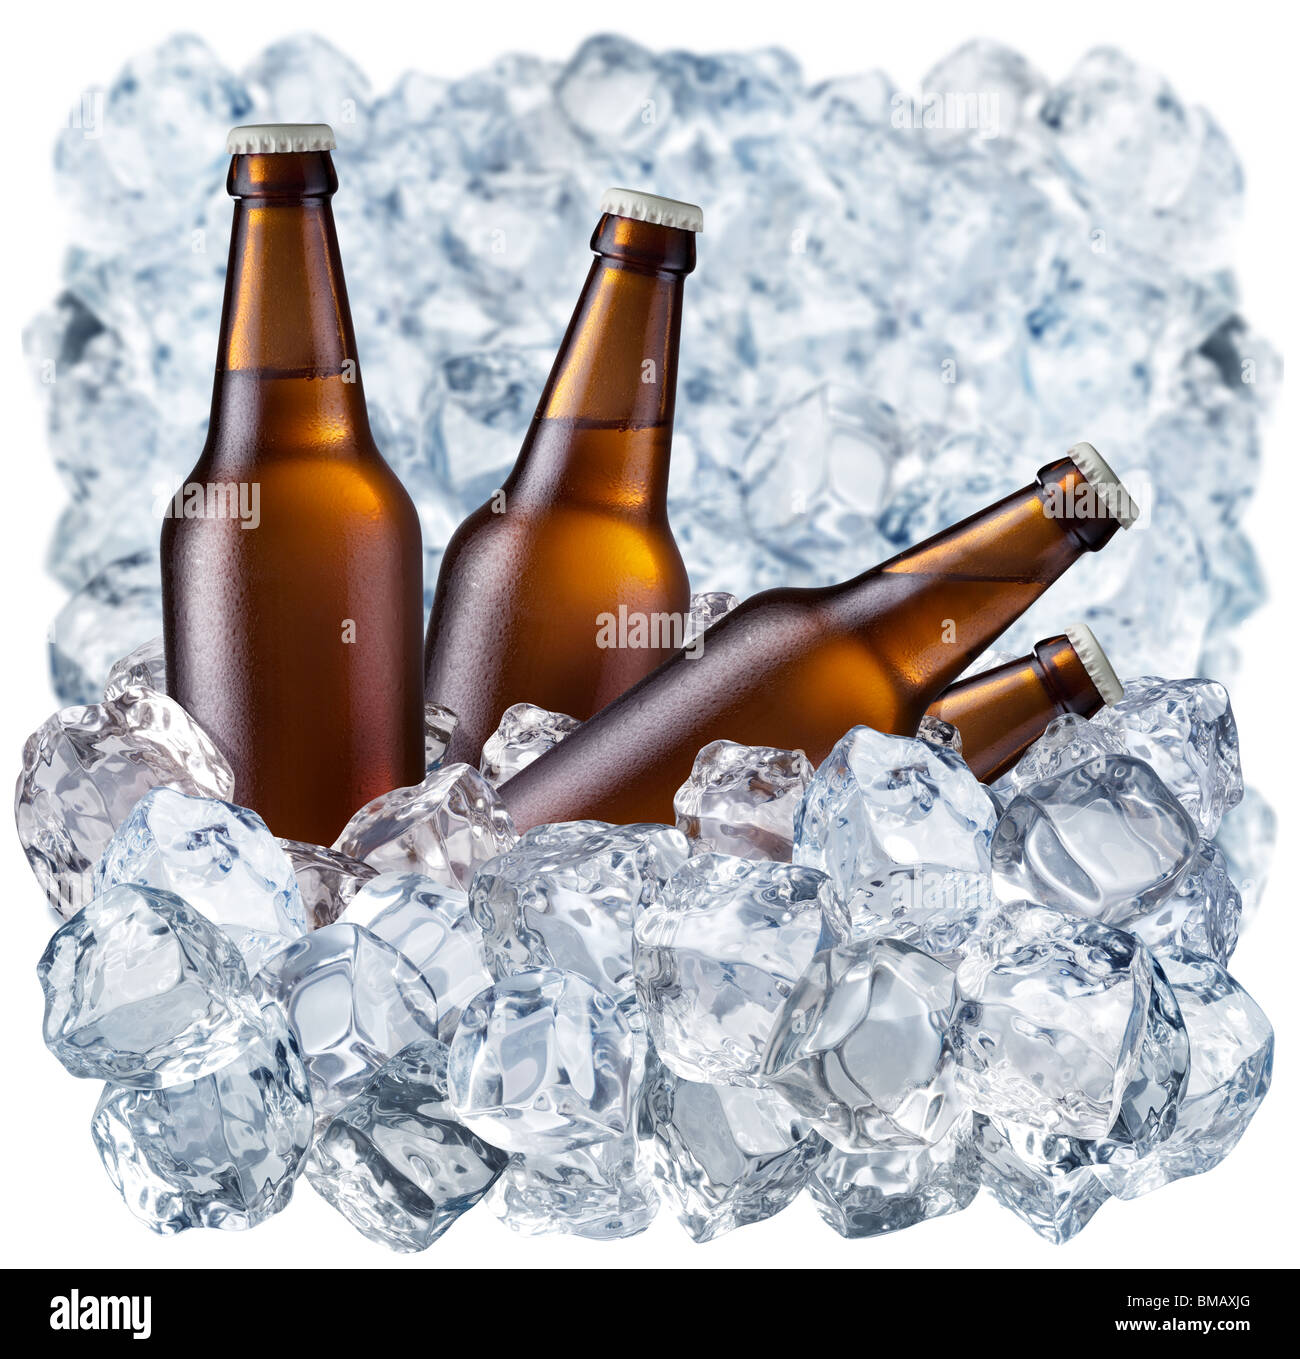 Bottles of beer on ice Stock Photo